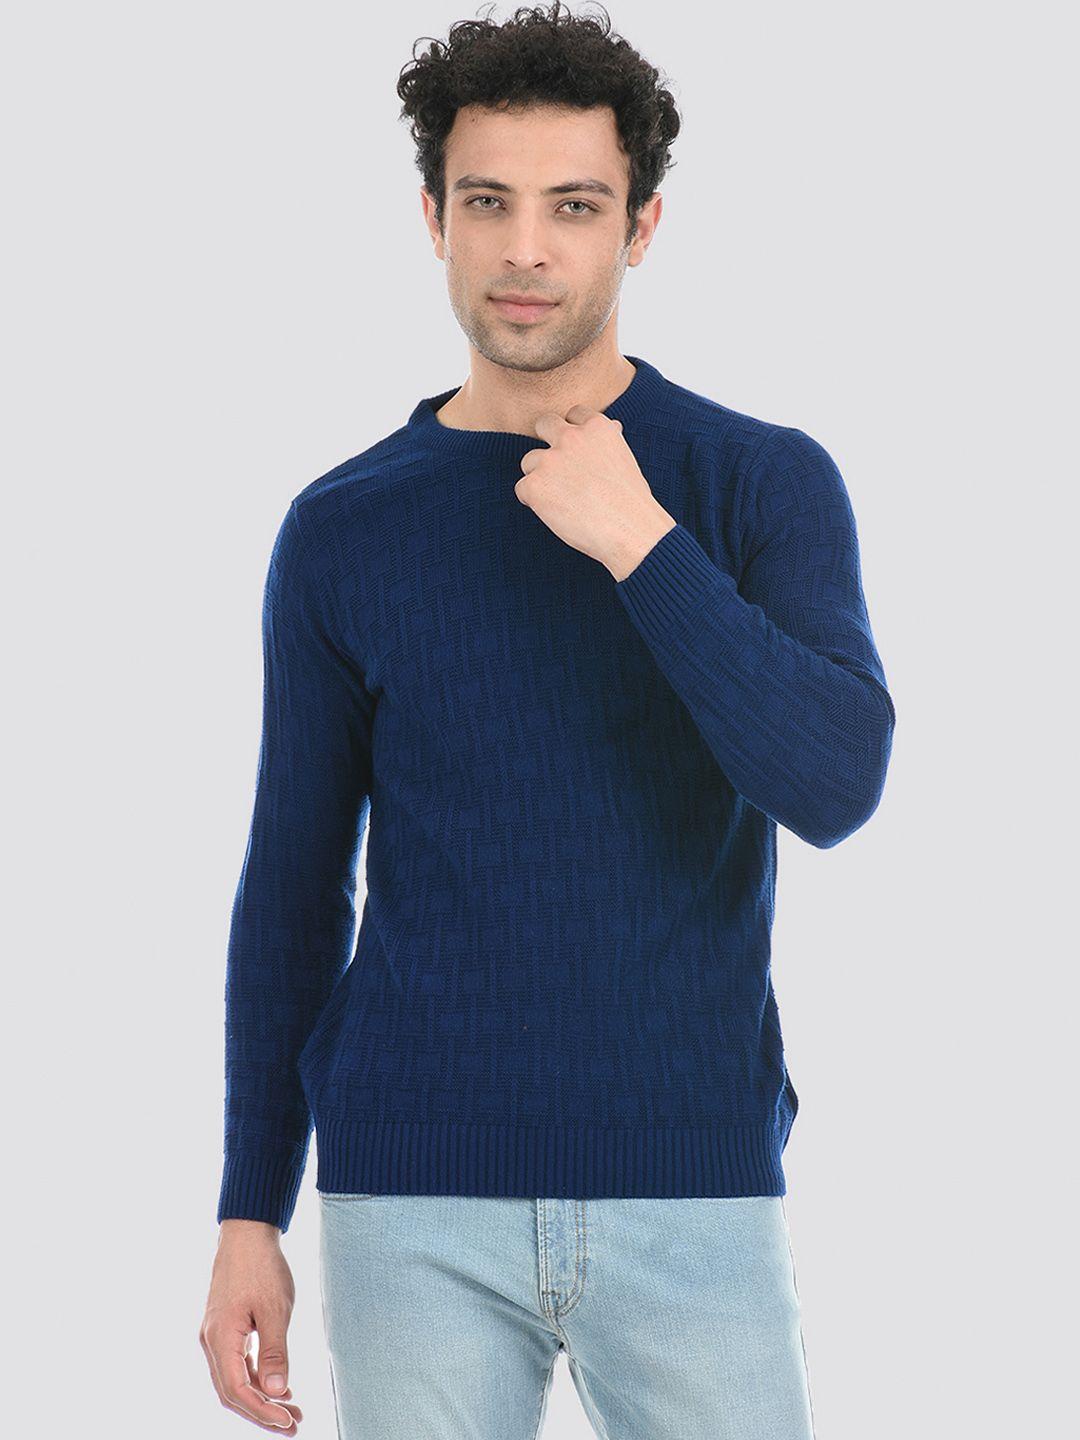 cloak-&-decker-by-monte-carlo-men-blue-&-black-acrylic-pullover-sweater